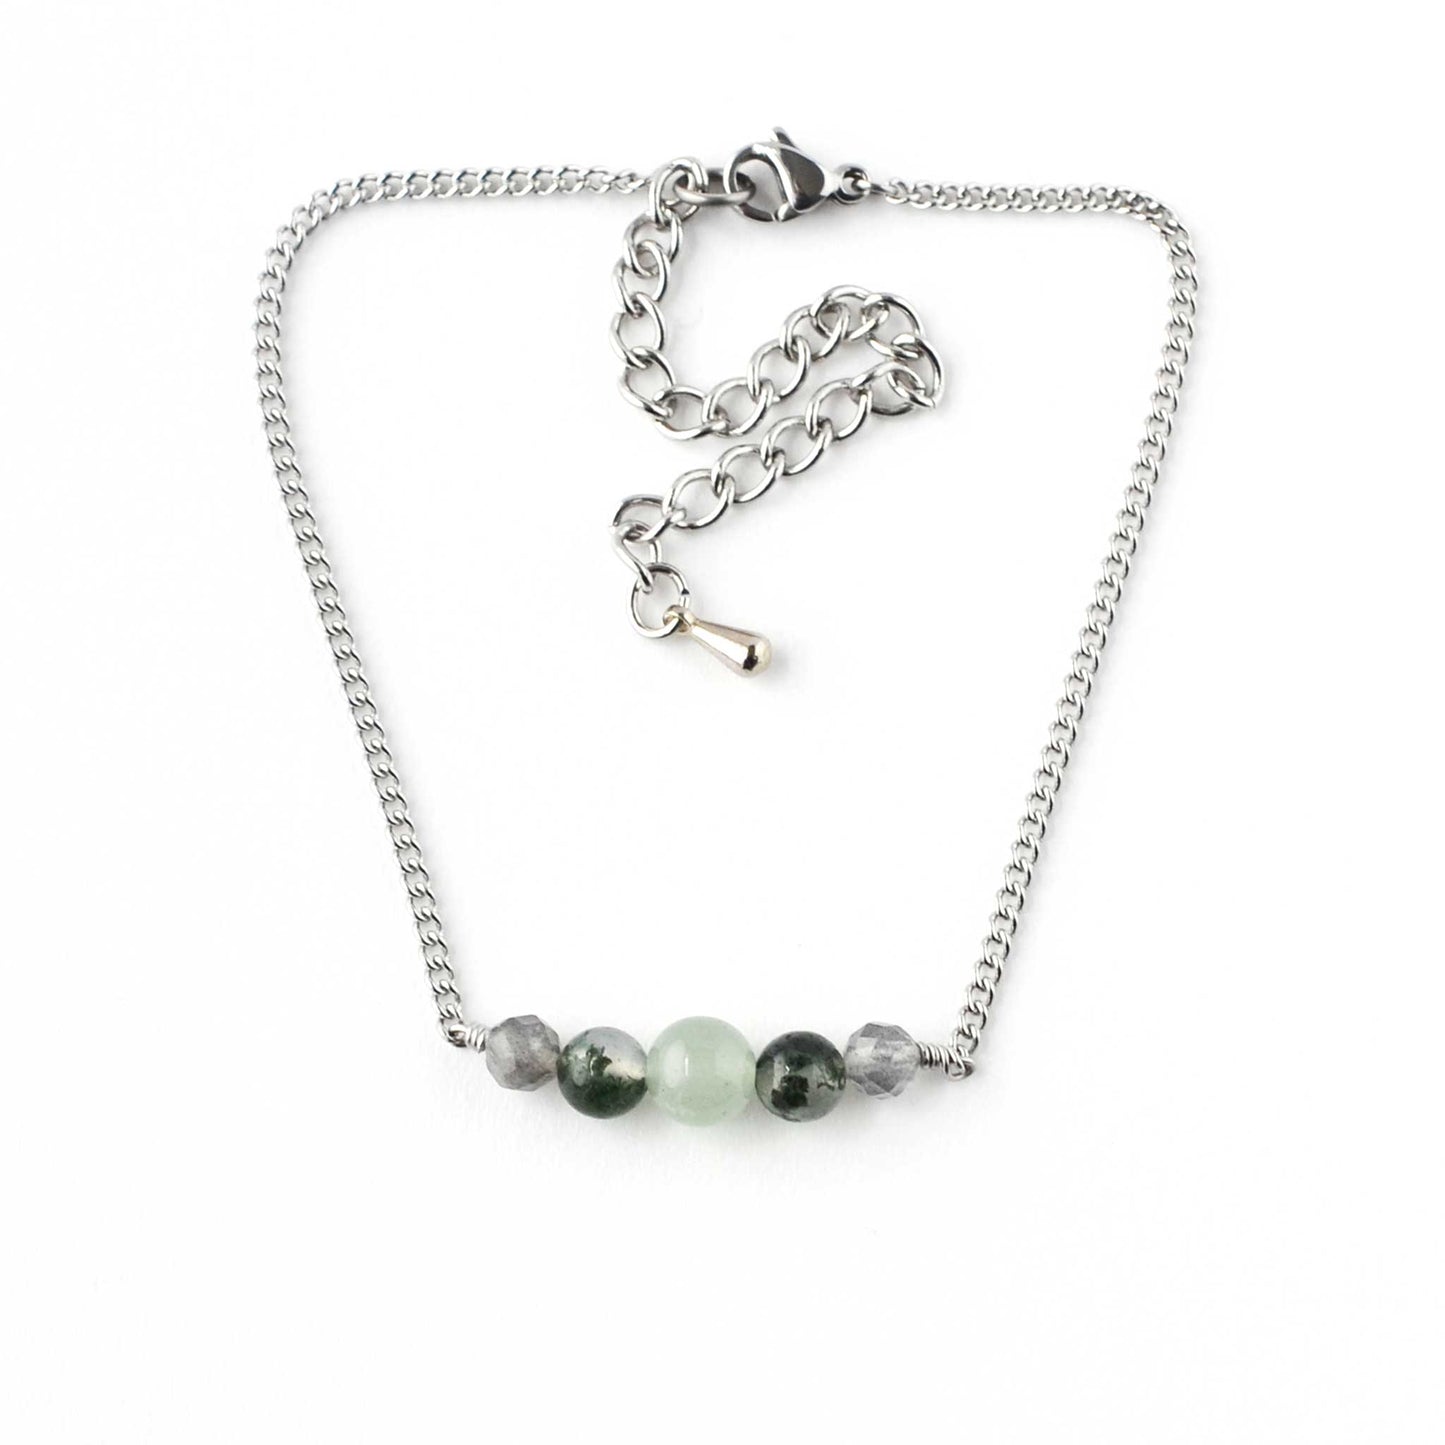 Green gemstone adjustable bracelet on white background